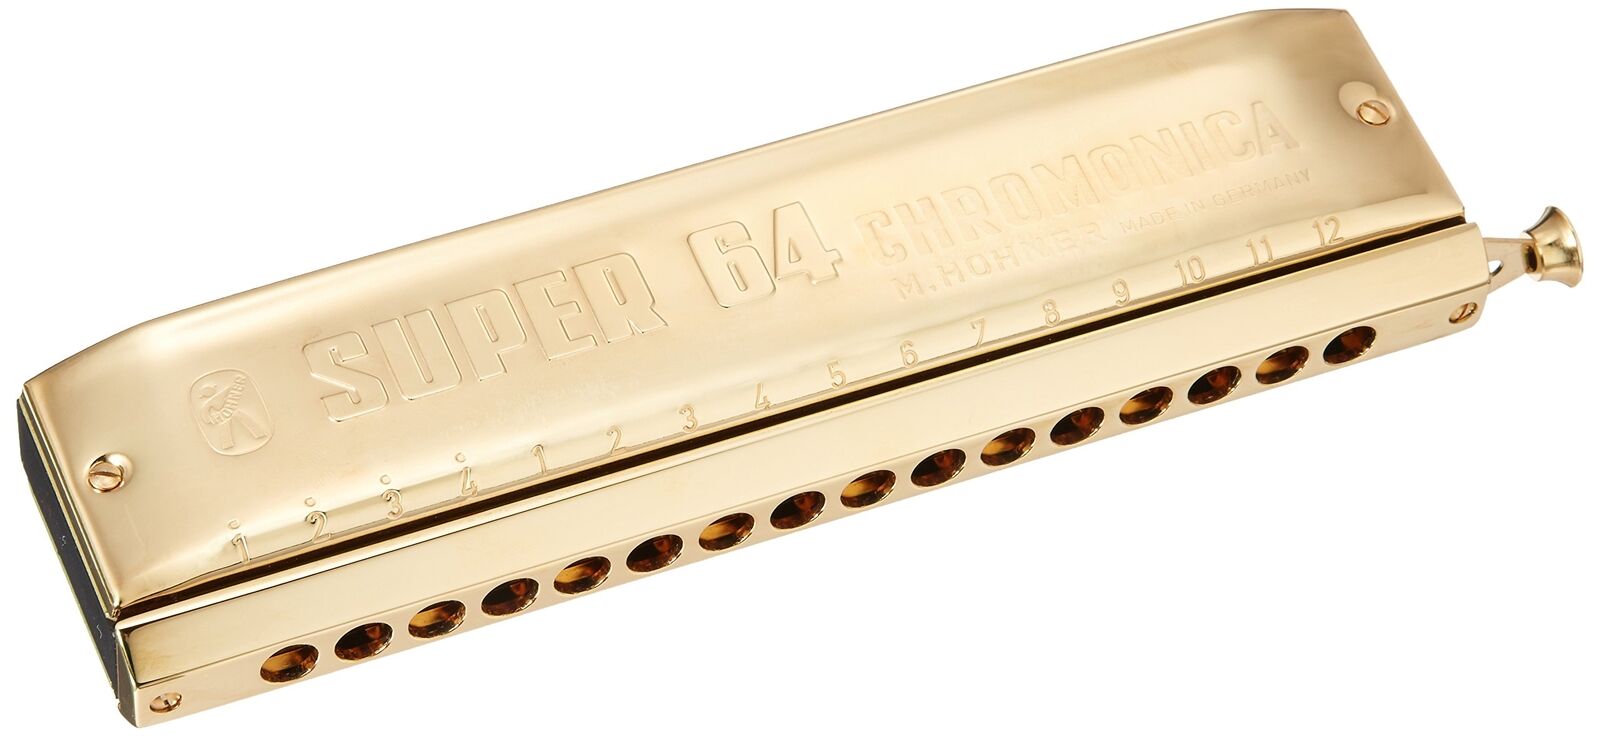 Hohner Chromatic Harmonica Super-64-Gold 7583/64 Playability 7583/64 Gold